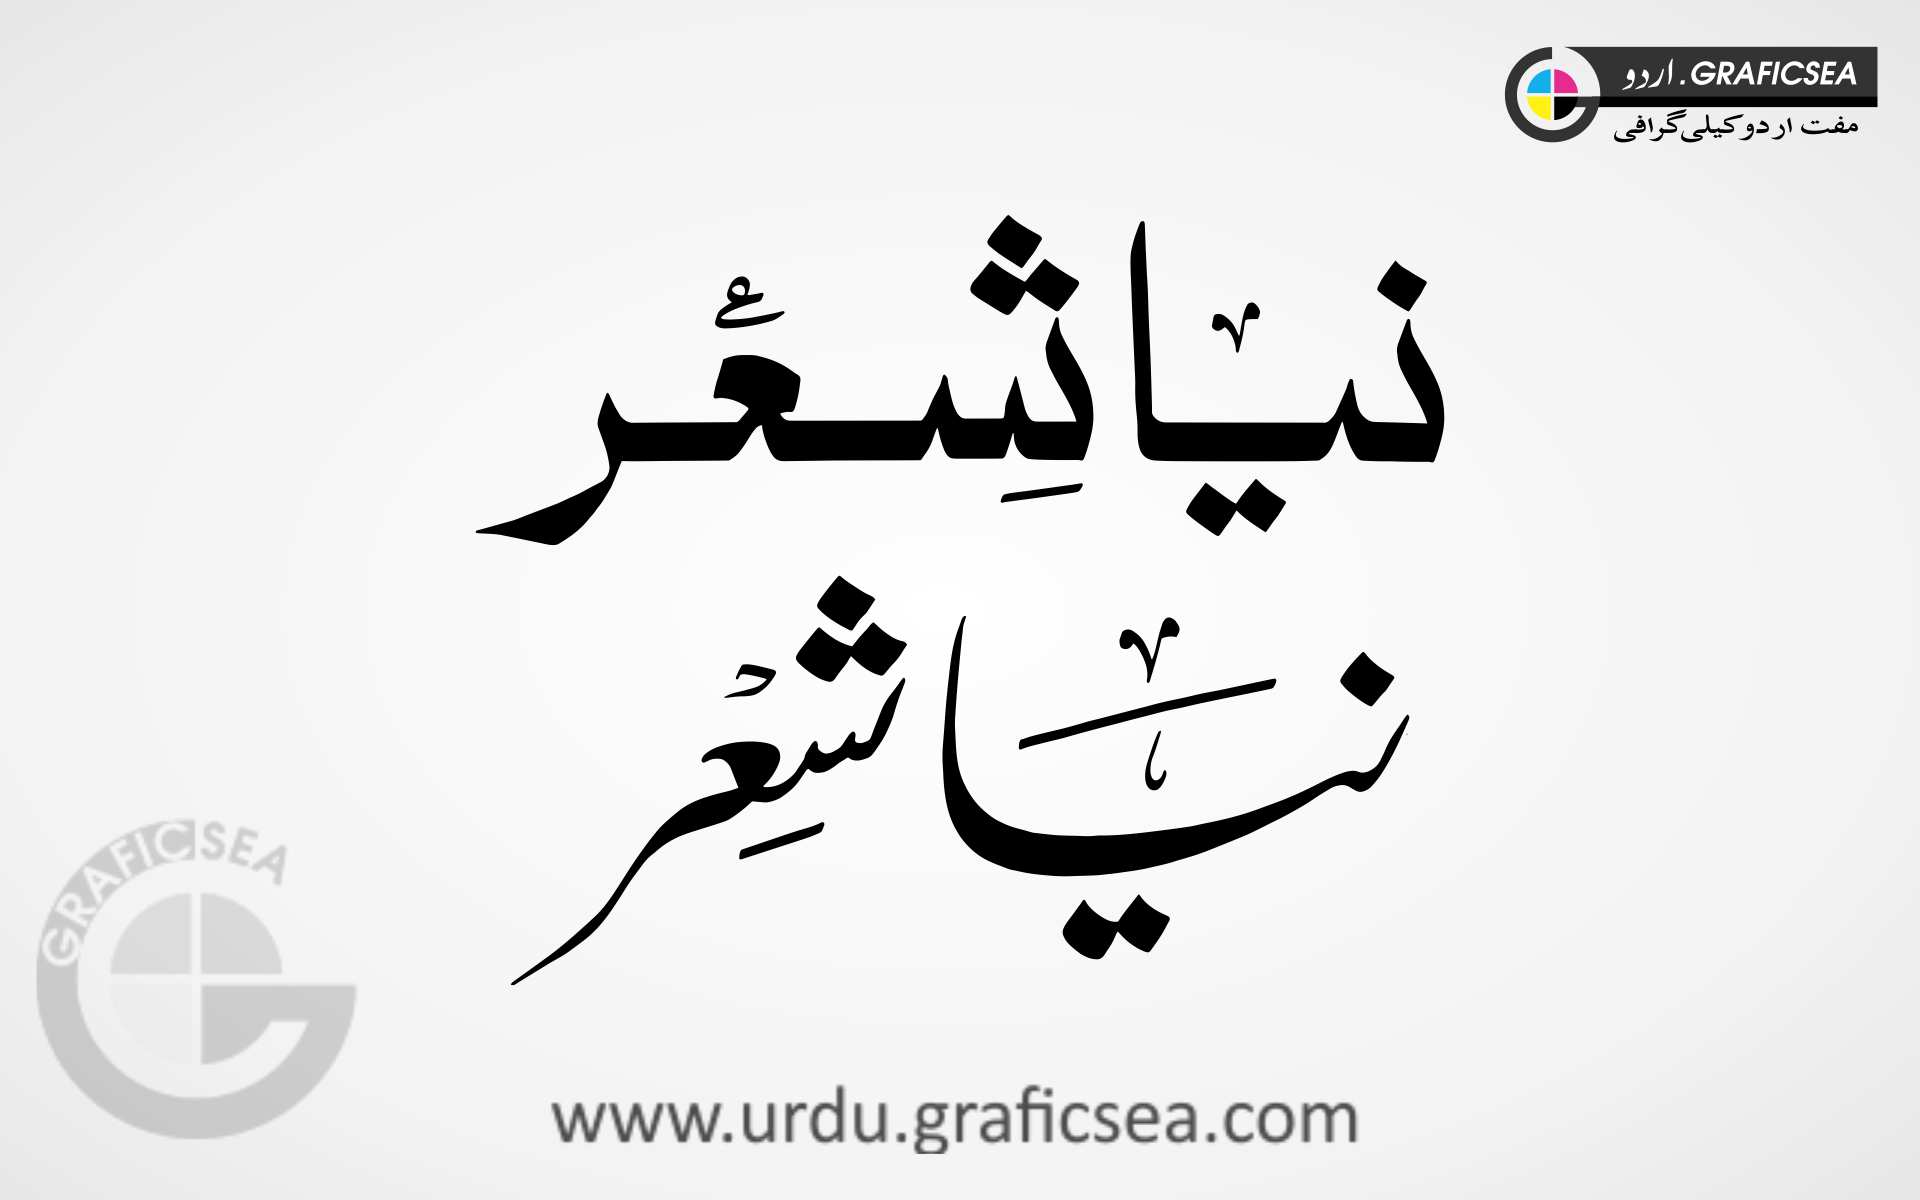 Naya Shair 2 Style Urdu Calligraphy